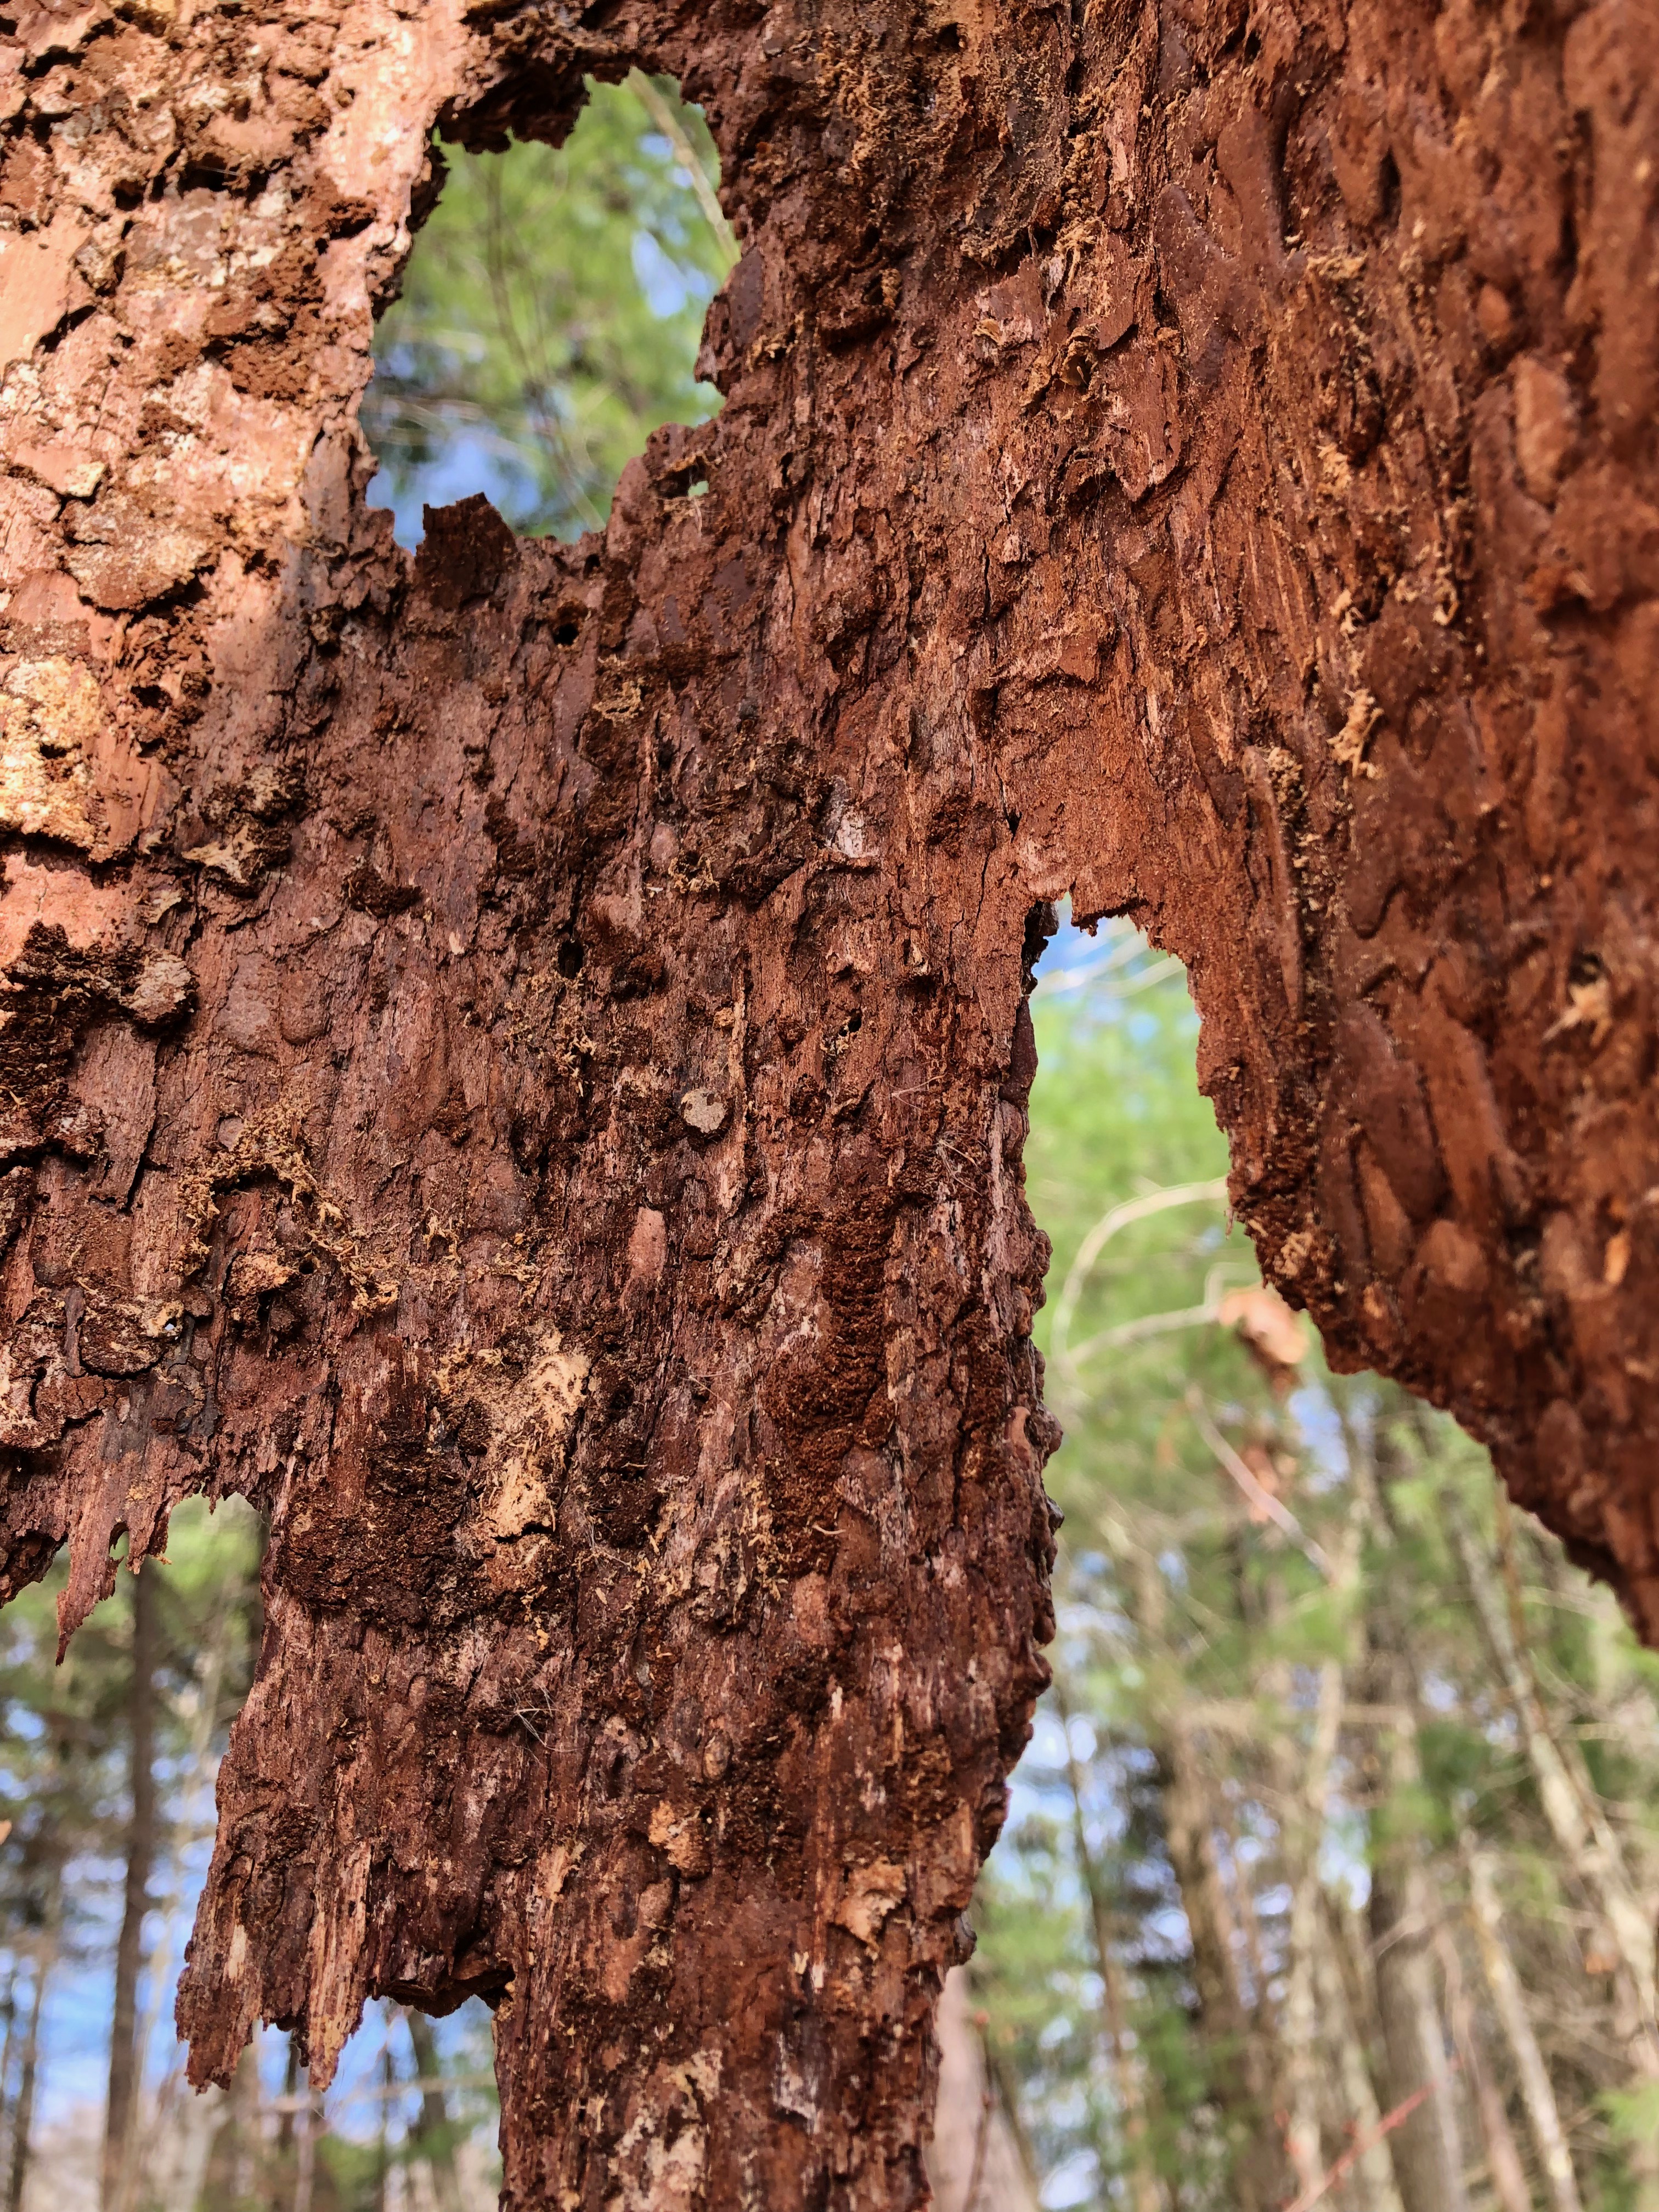 041419-bark-hanging-off tree